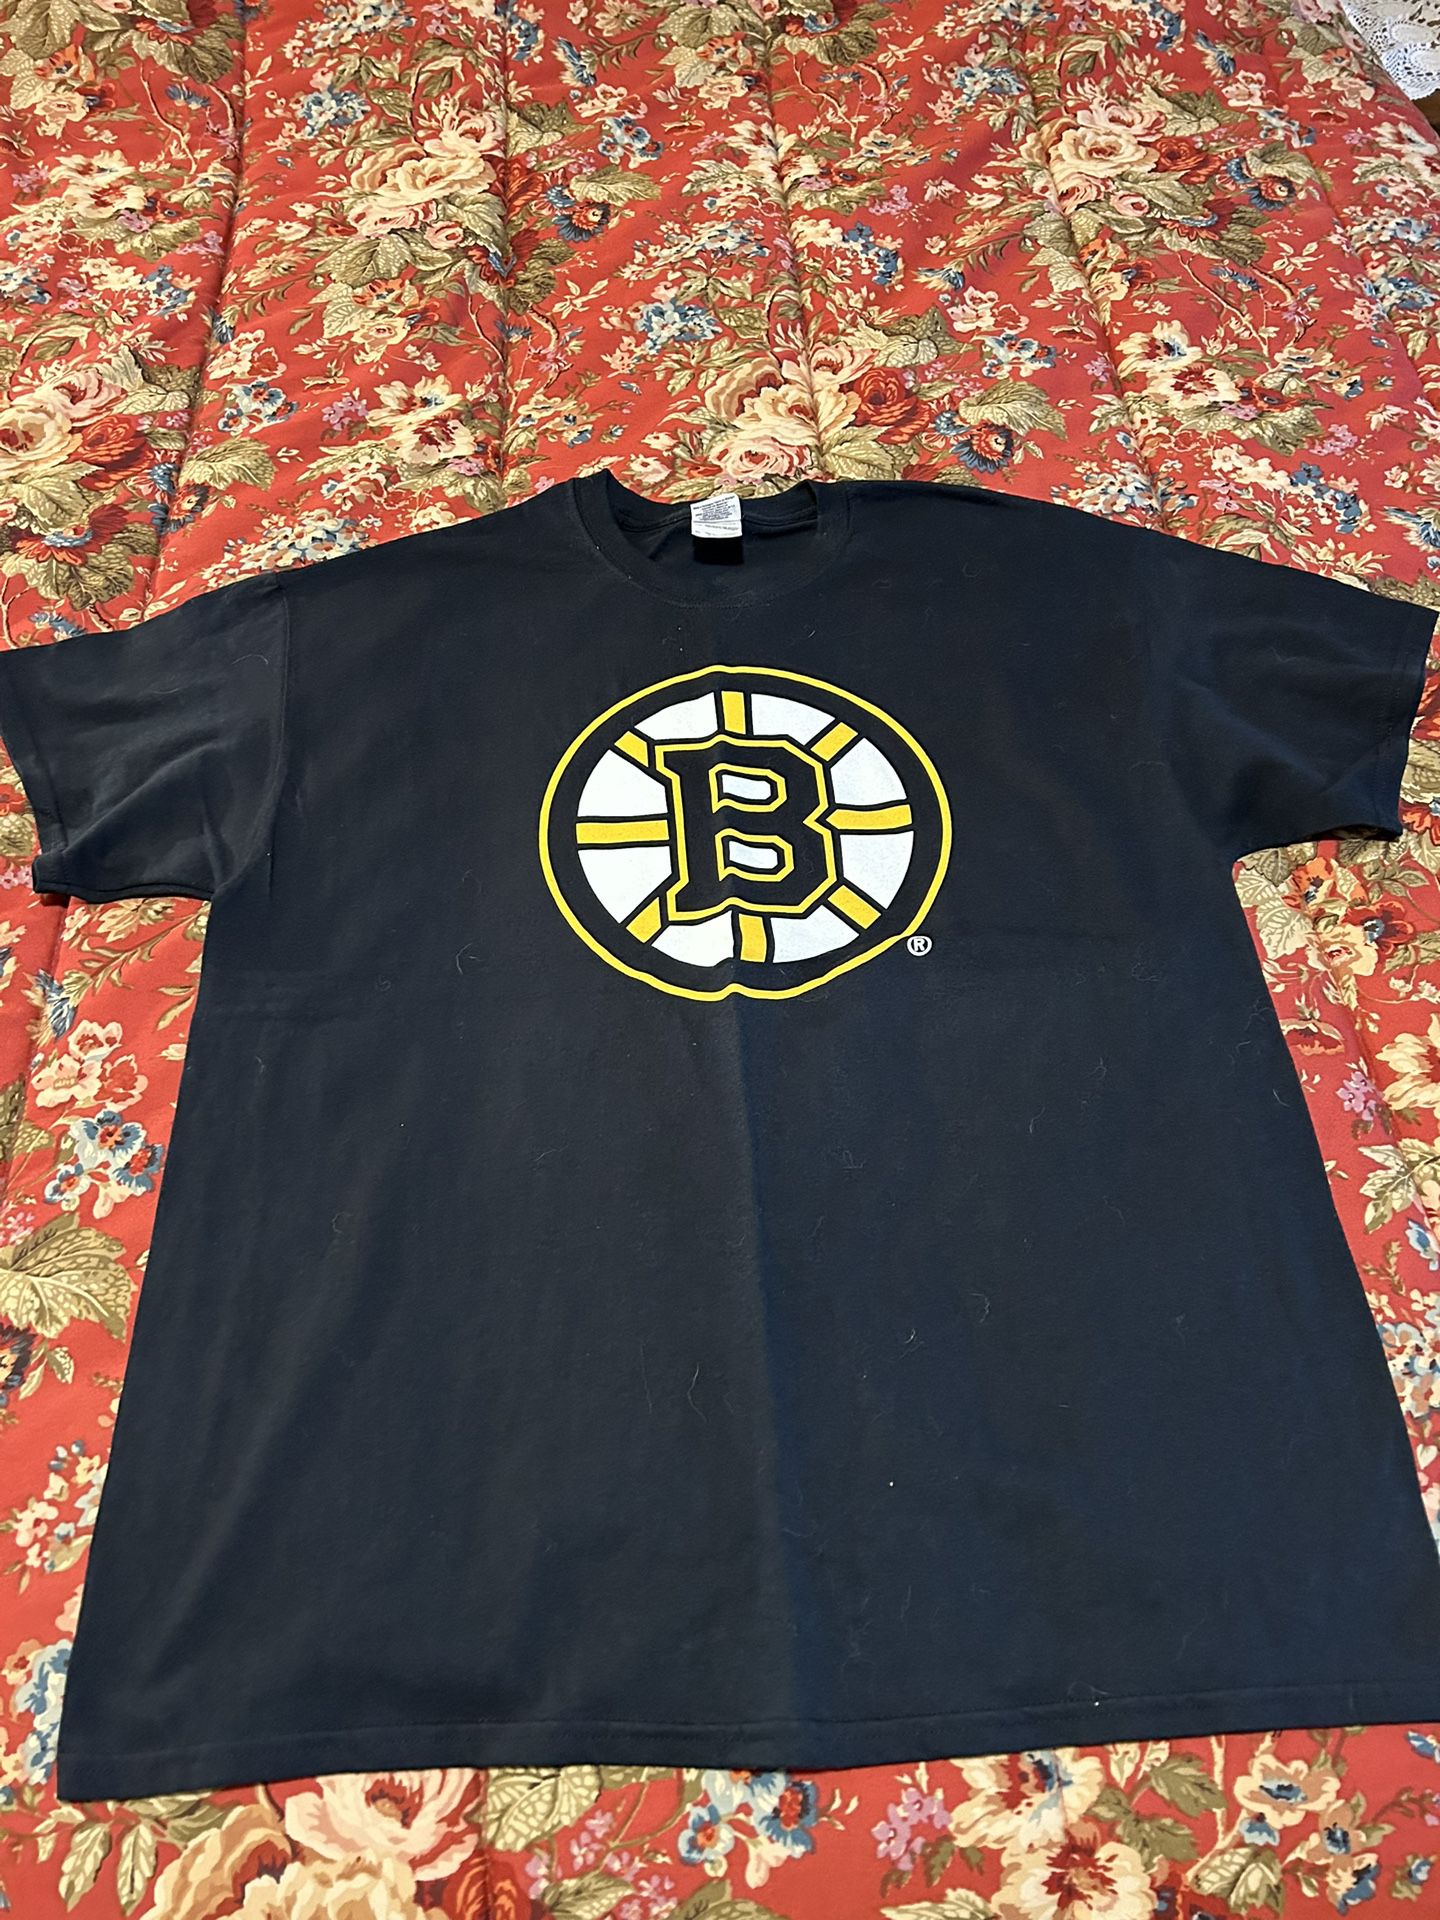 Mens’ Size XL - Black Bruins T-shirt - Brand New - Short Sleeved